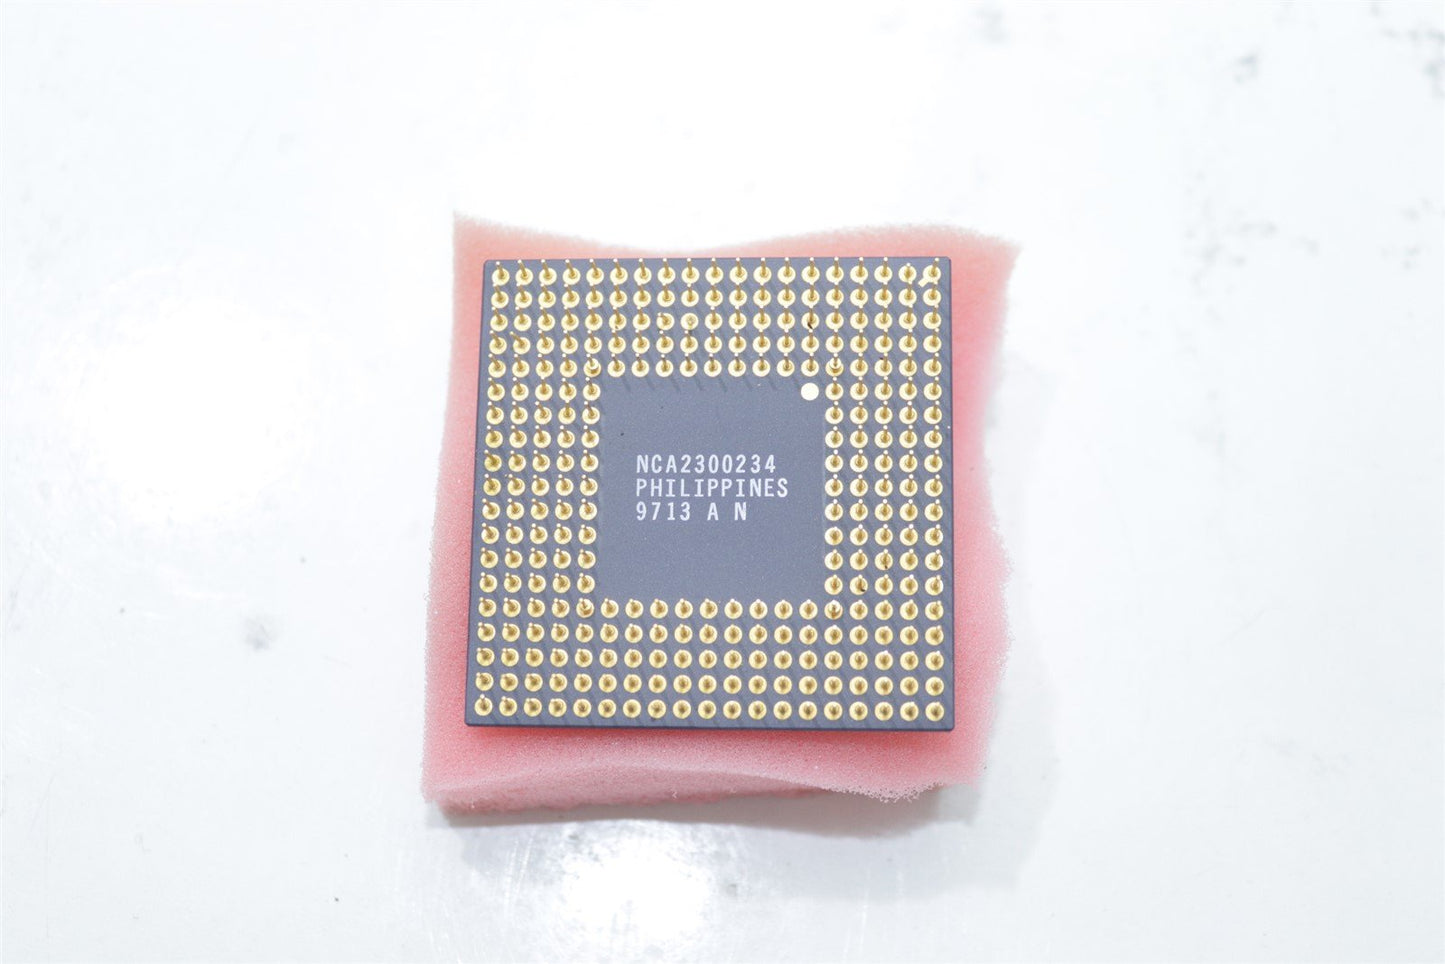 ALTERA Flex EPF81500AGC280-4 High Performance FPGA